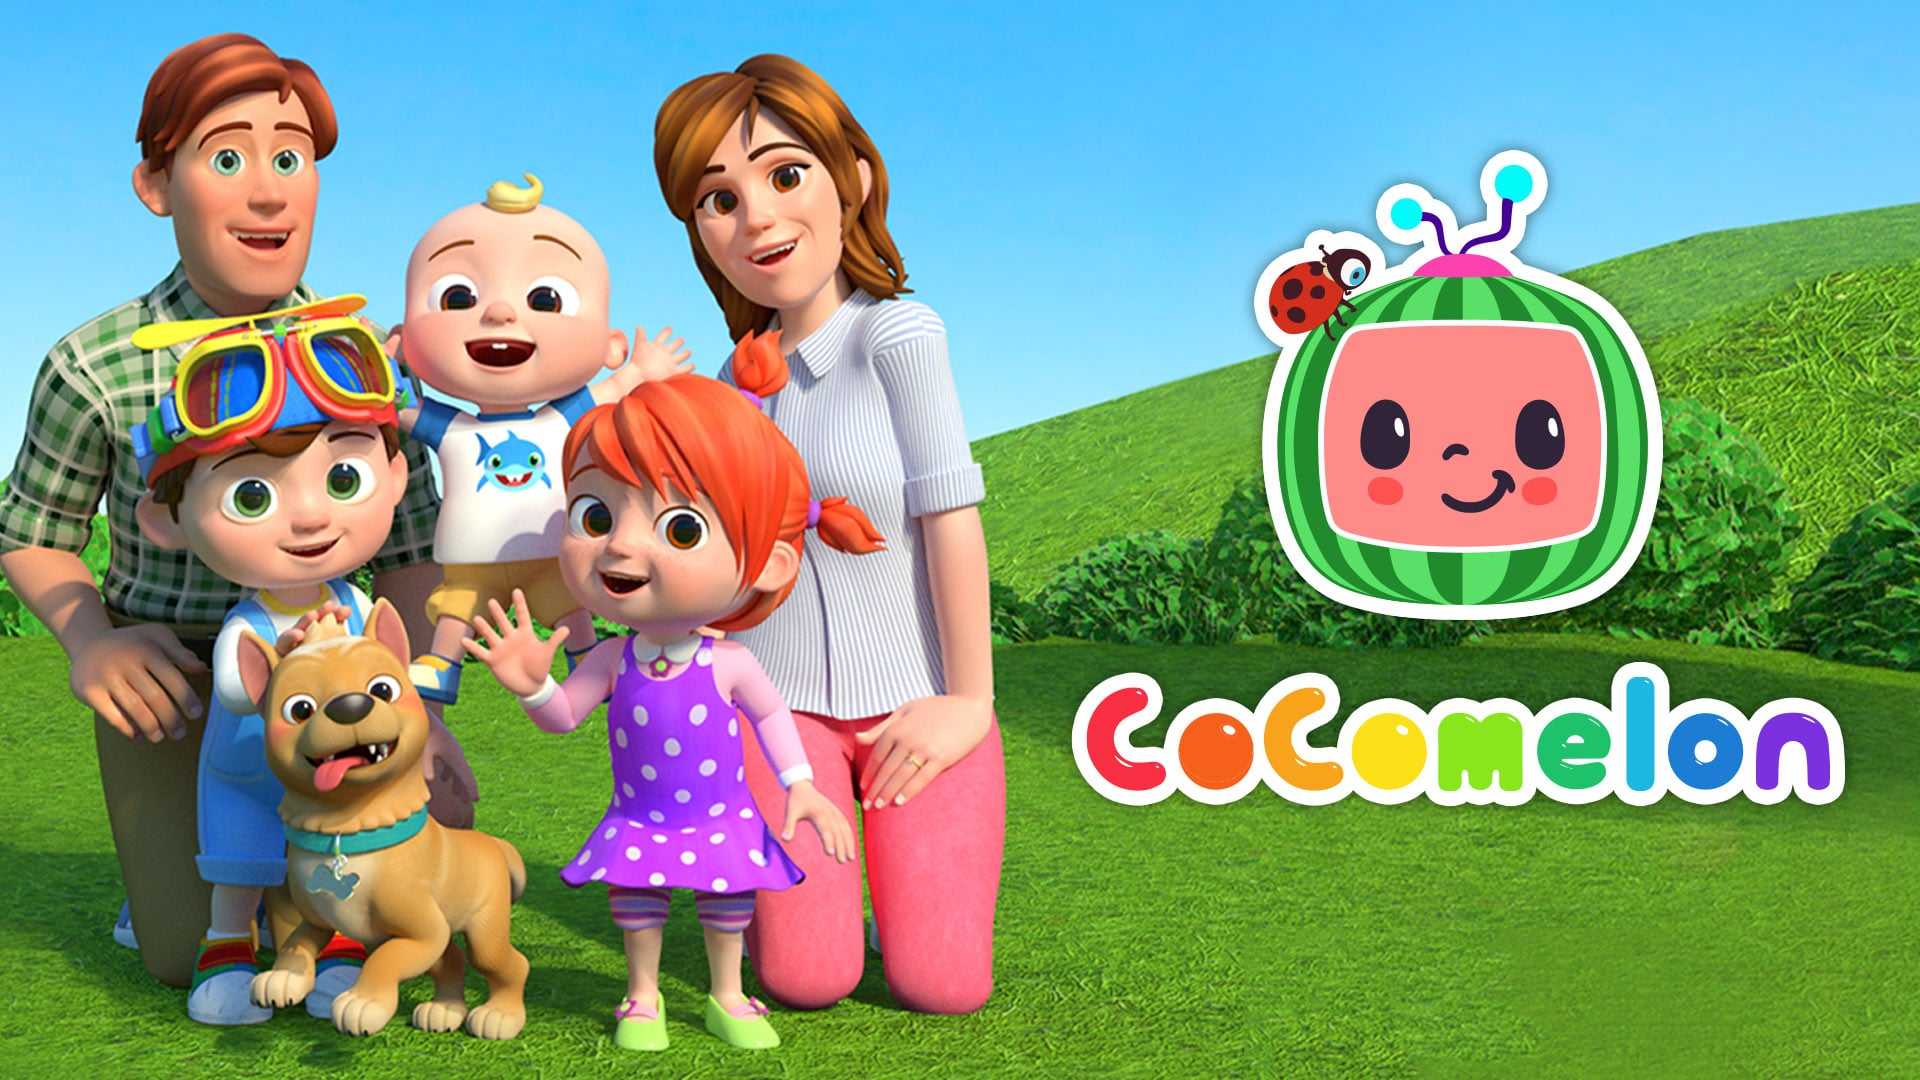 Cocomelon Babies Character 4K wallpaper download